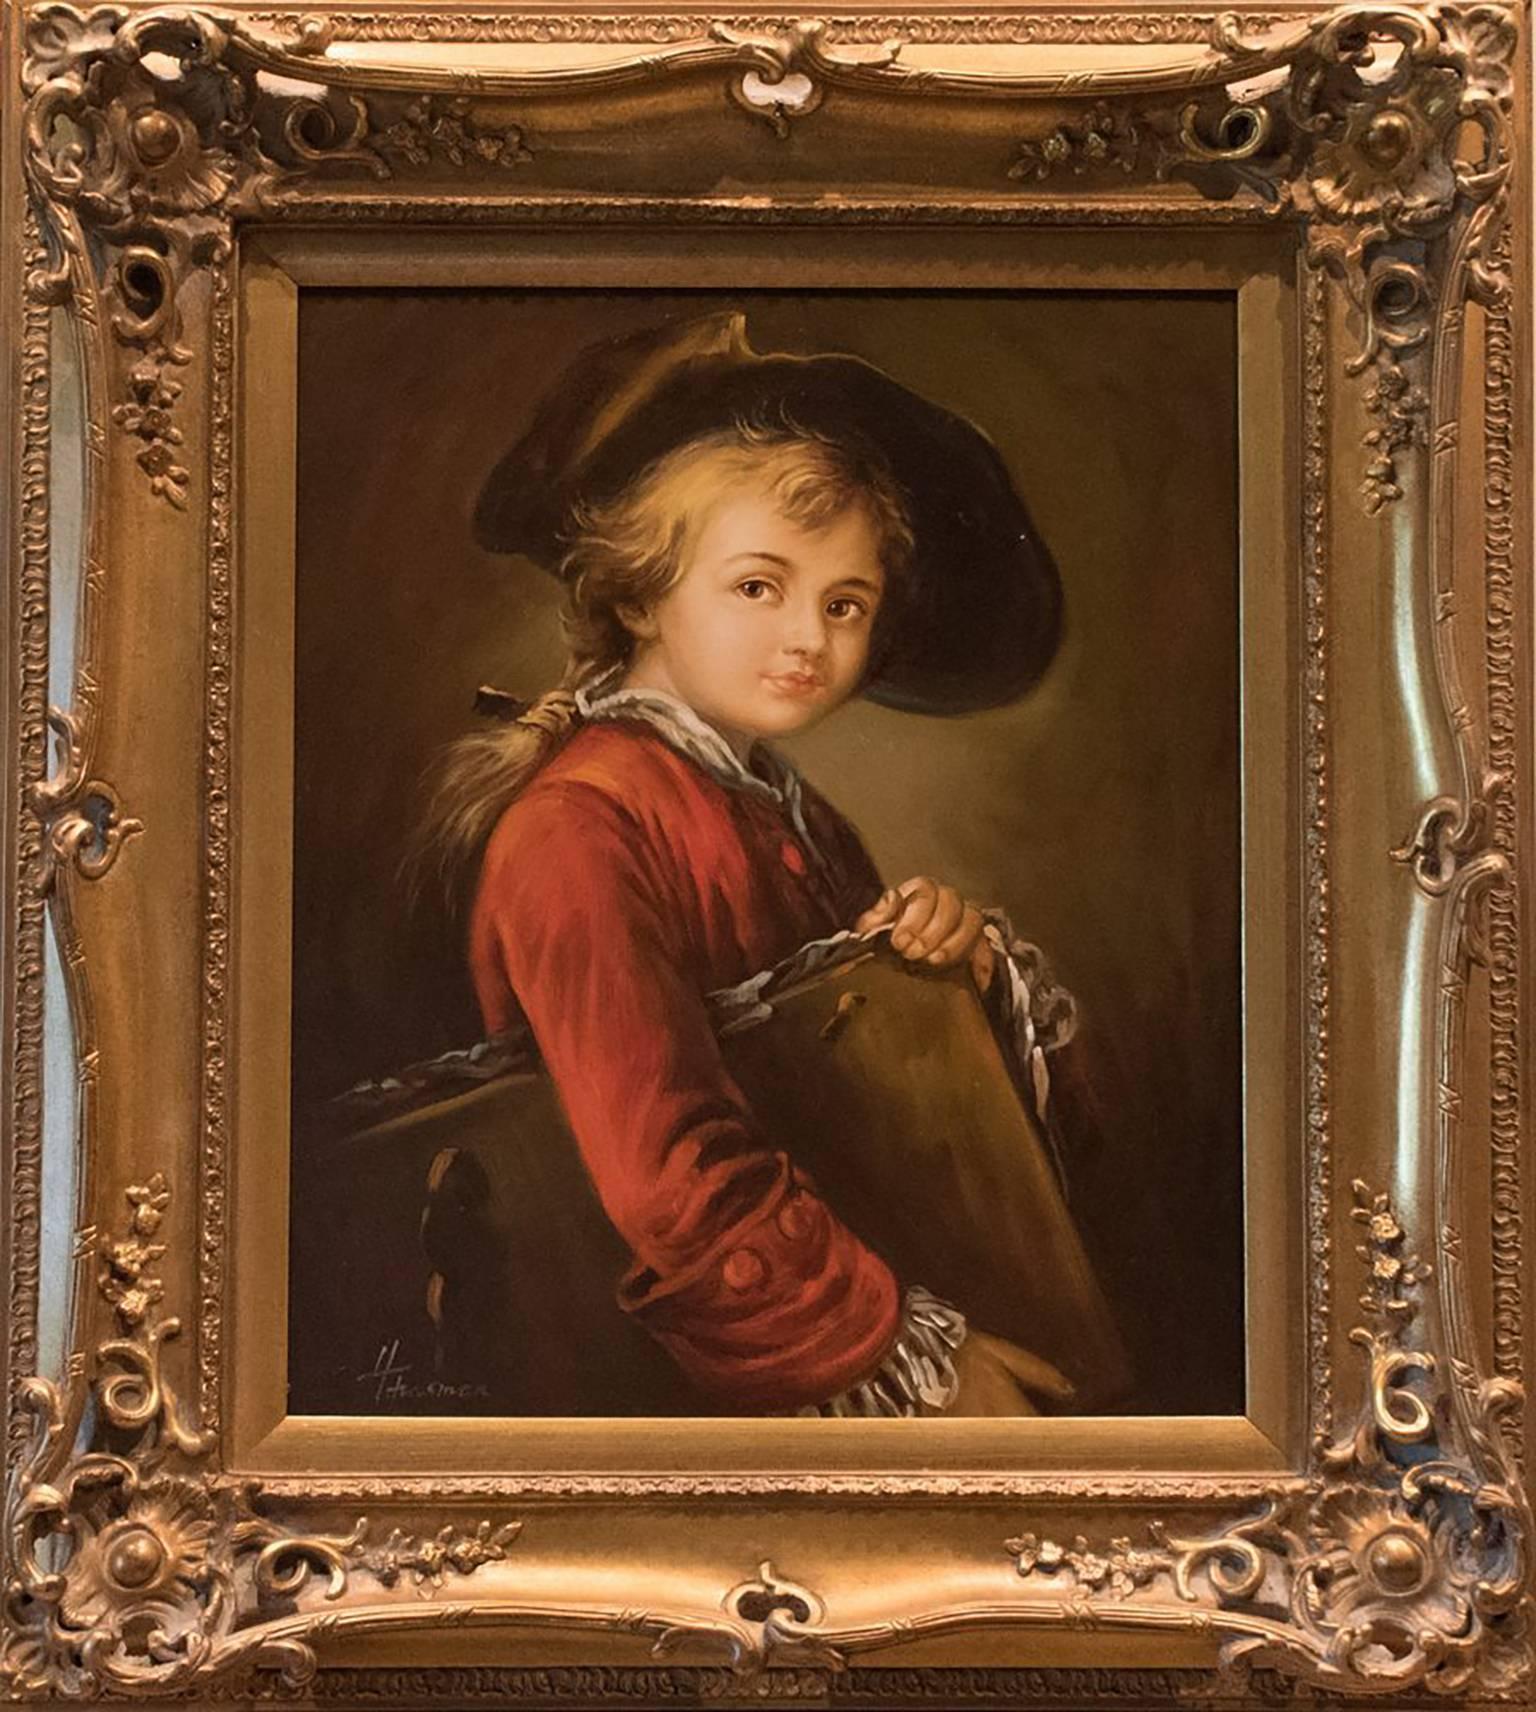 (After) Nicolas Bernard Lepicie Portrait Painting - Portrait Oil After Nicolas Bernard Lepicie Entitled “The Young Draughtsman”